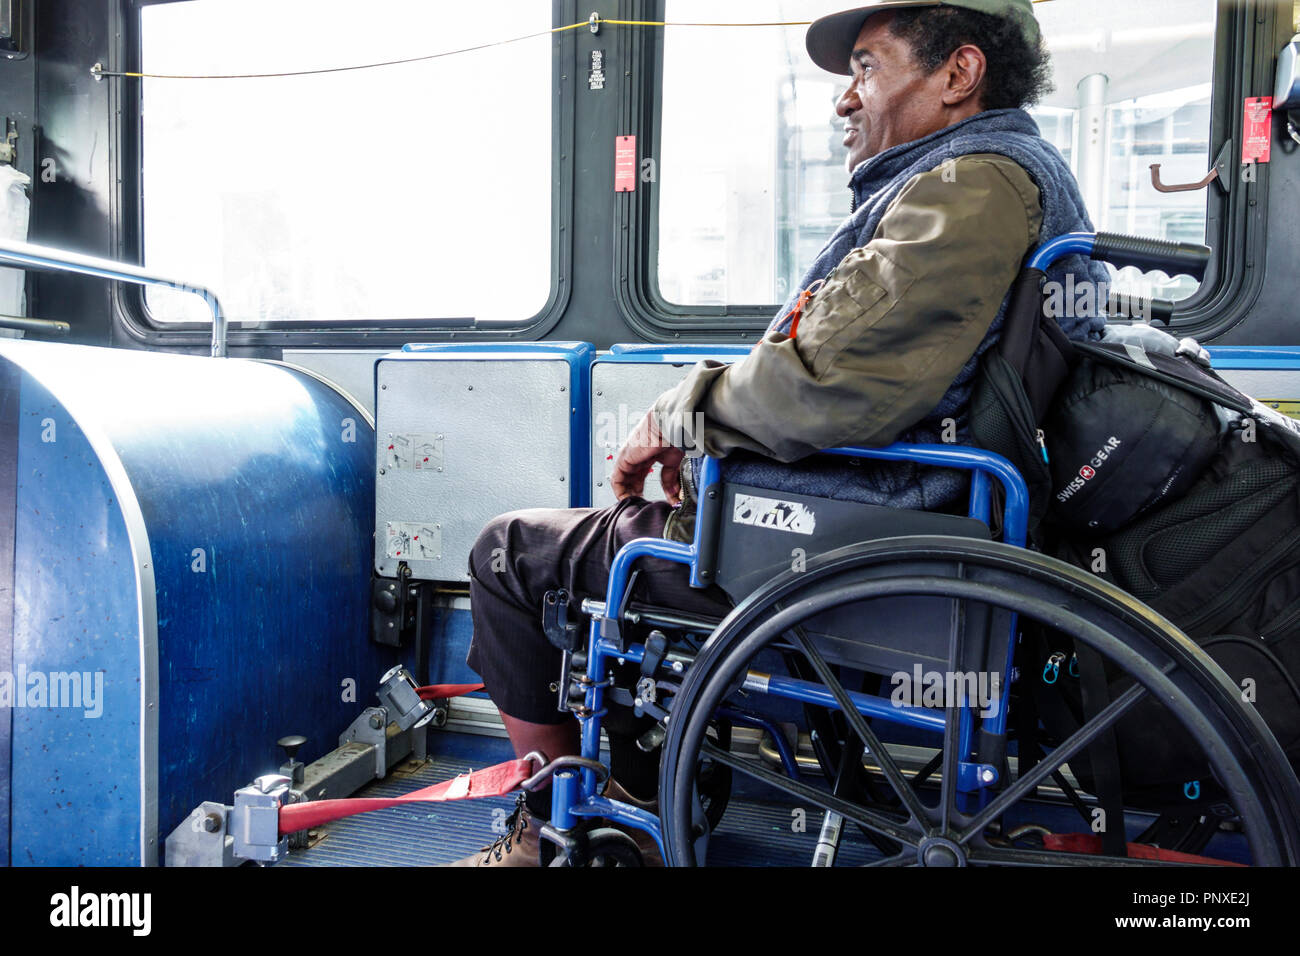 Miami Beach Florida,bus,passenger passengers rider riders,disabled handicapped special needs,Miami-Dade Metrobus rider,wheelchair,Black man men male,s Stock Photo